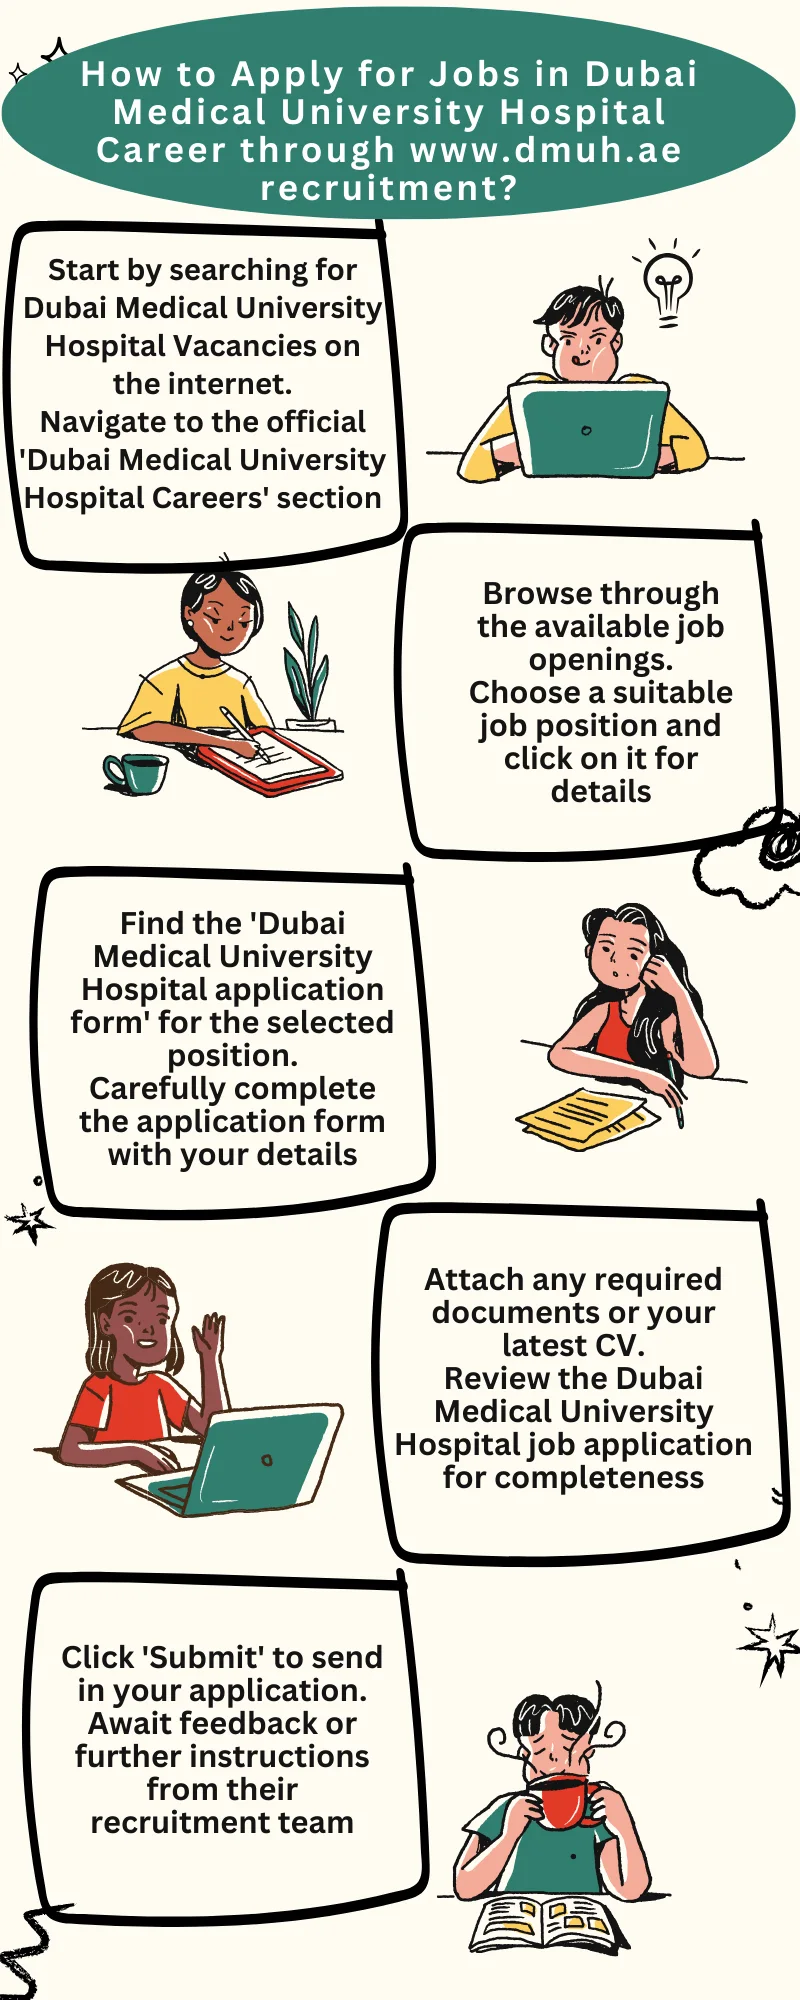 How to Apply for Jobs in Dubai Medical University Hospital Career through www.dmuh.ae recruitment?